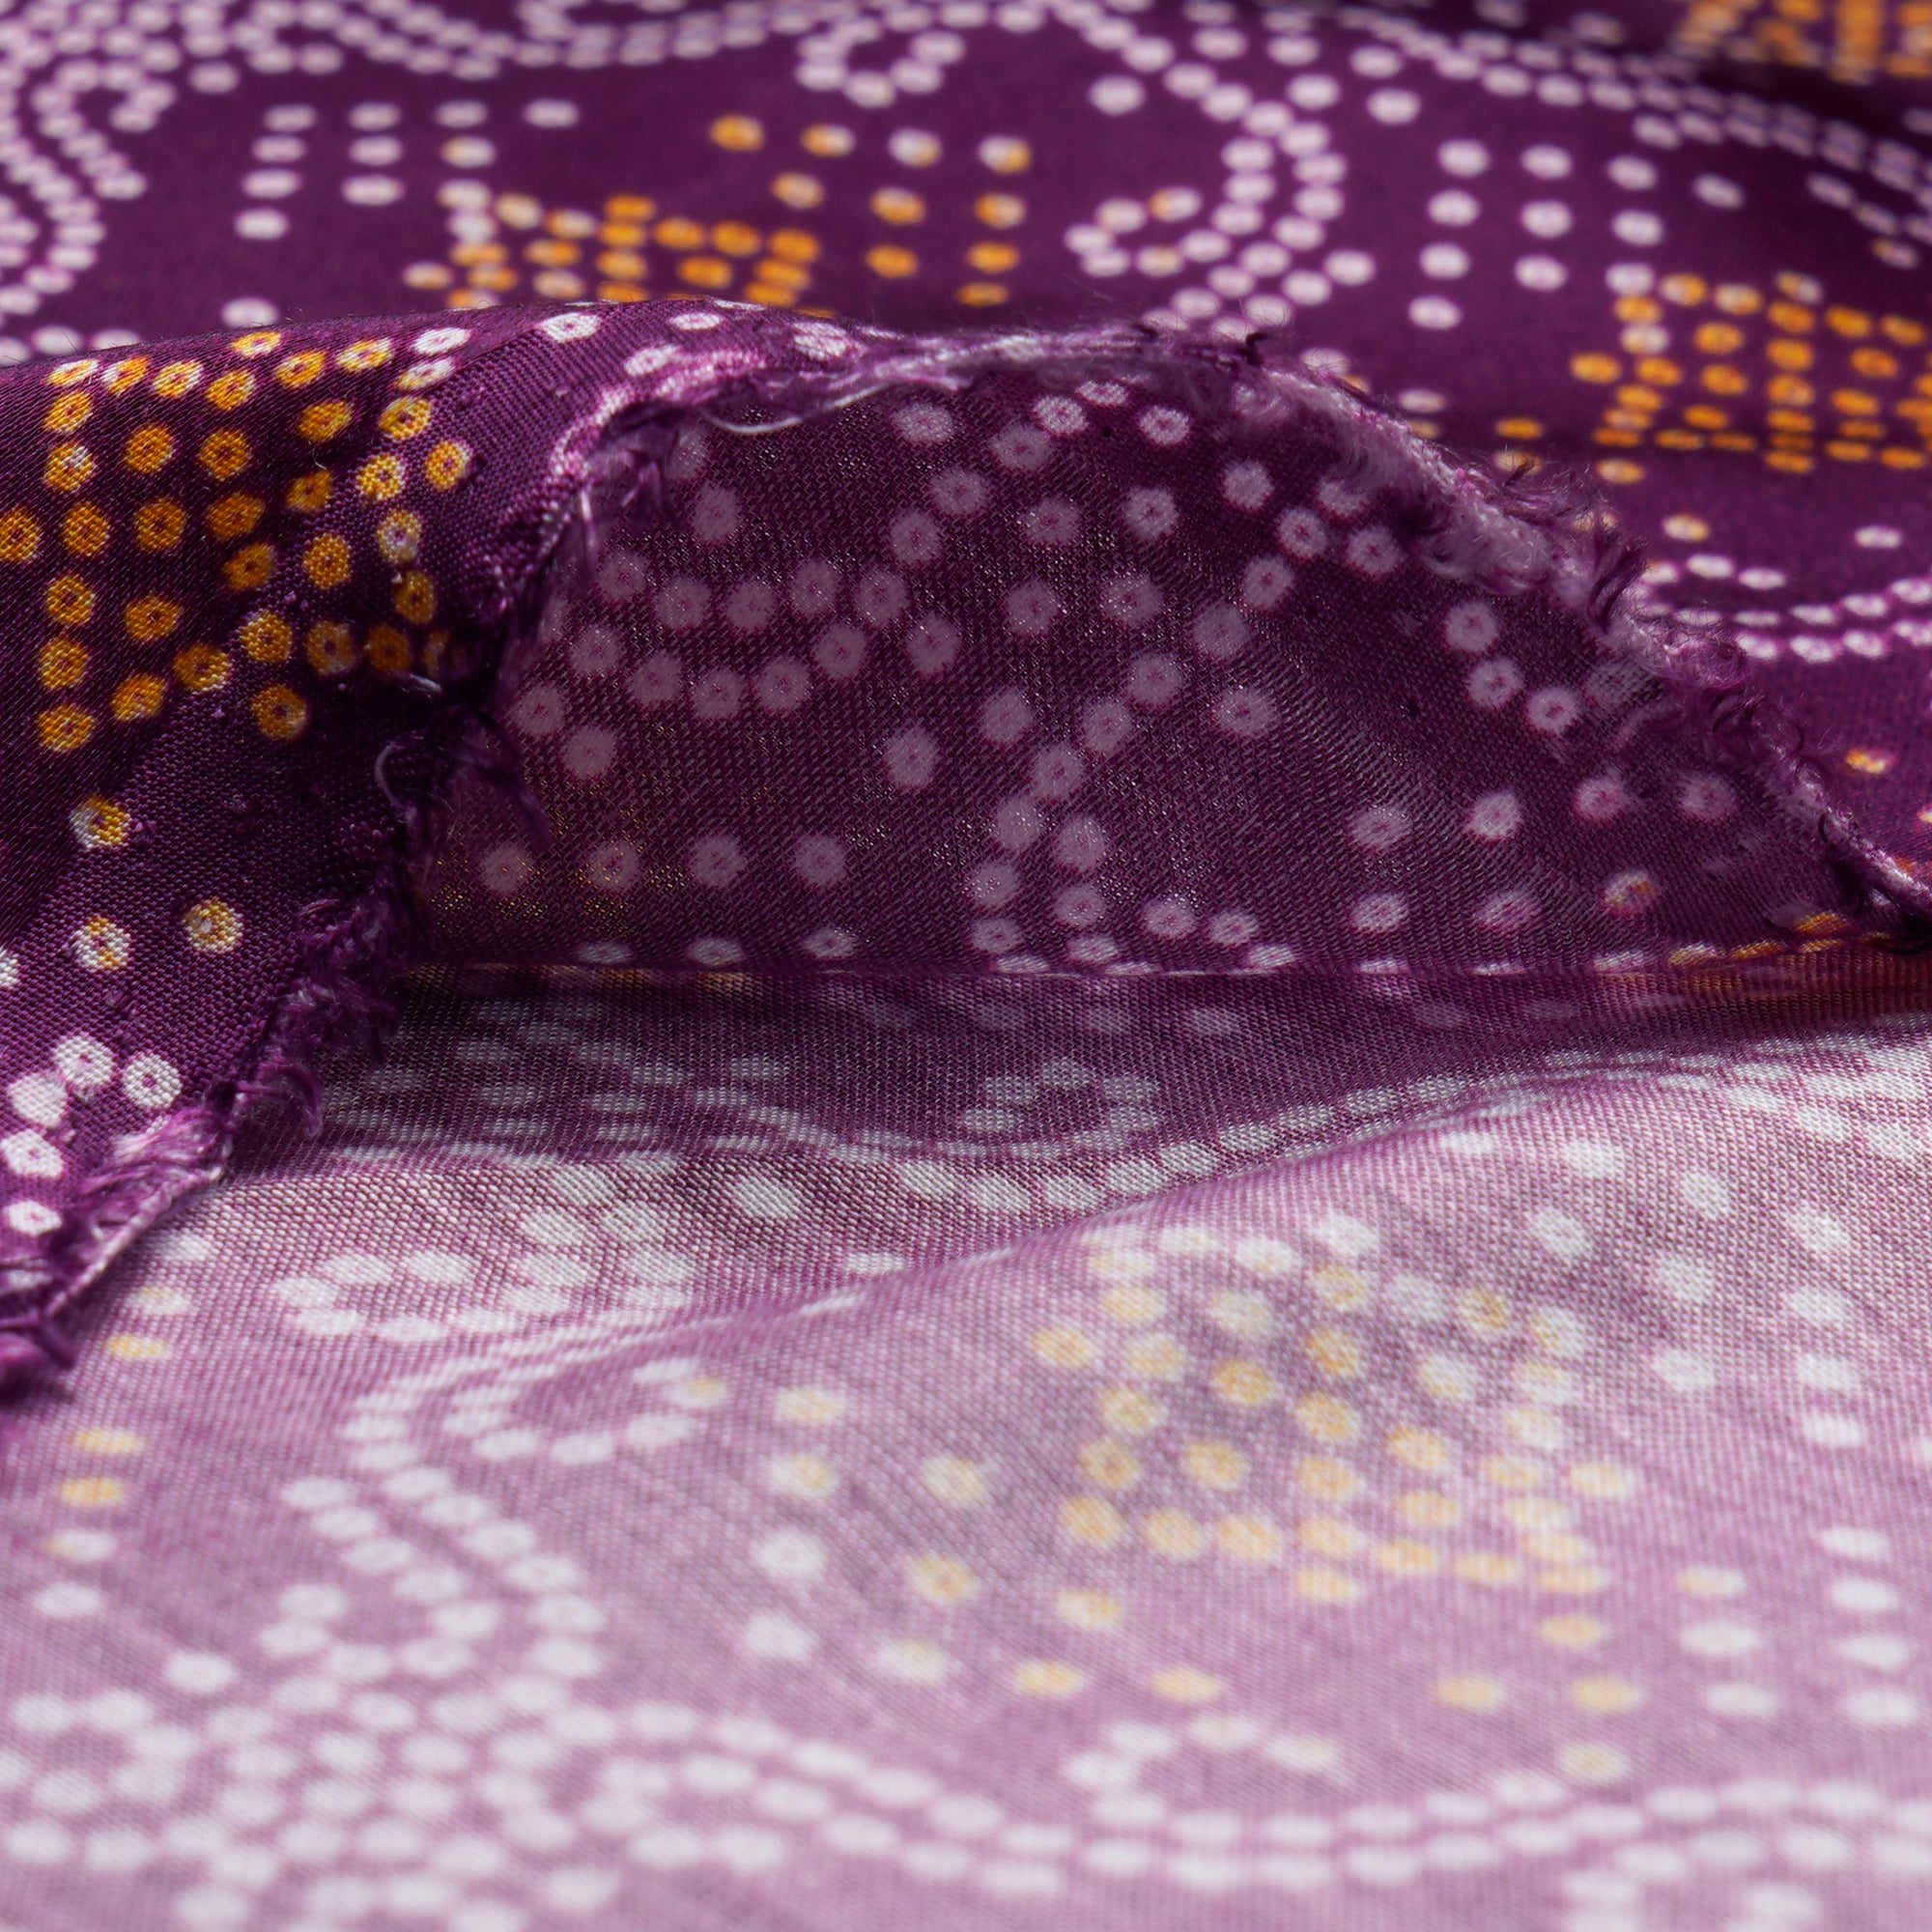 Purple Digital Printed Modal Satin Fabric